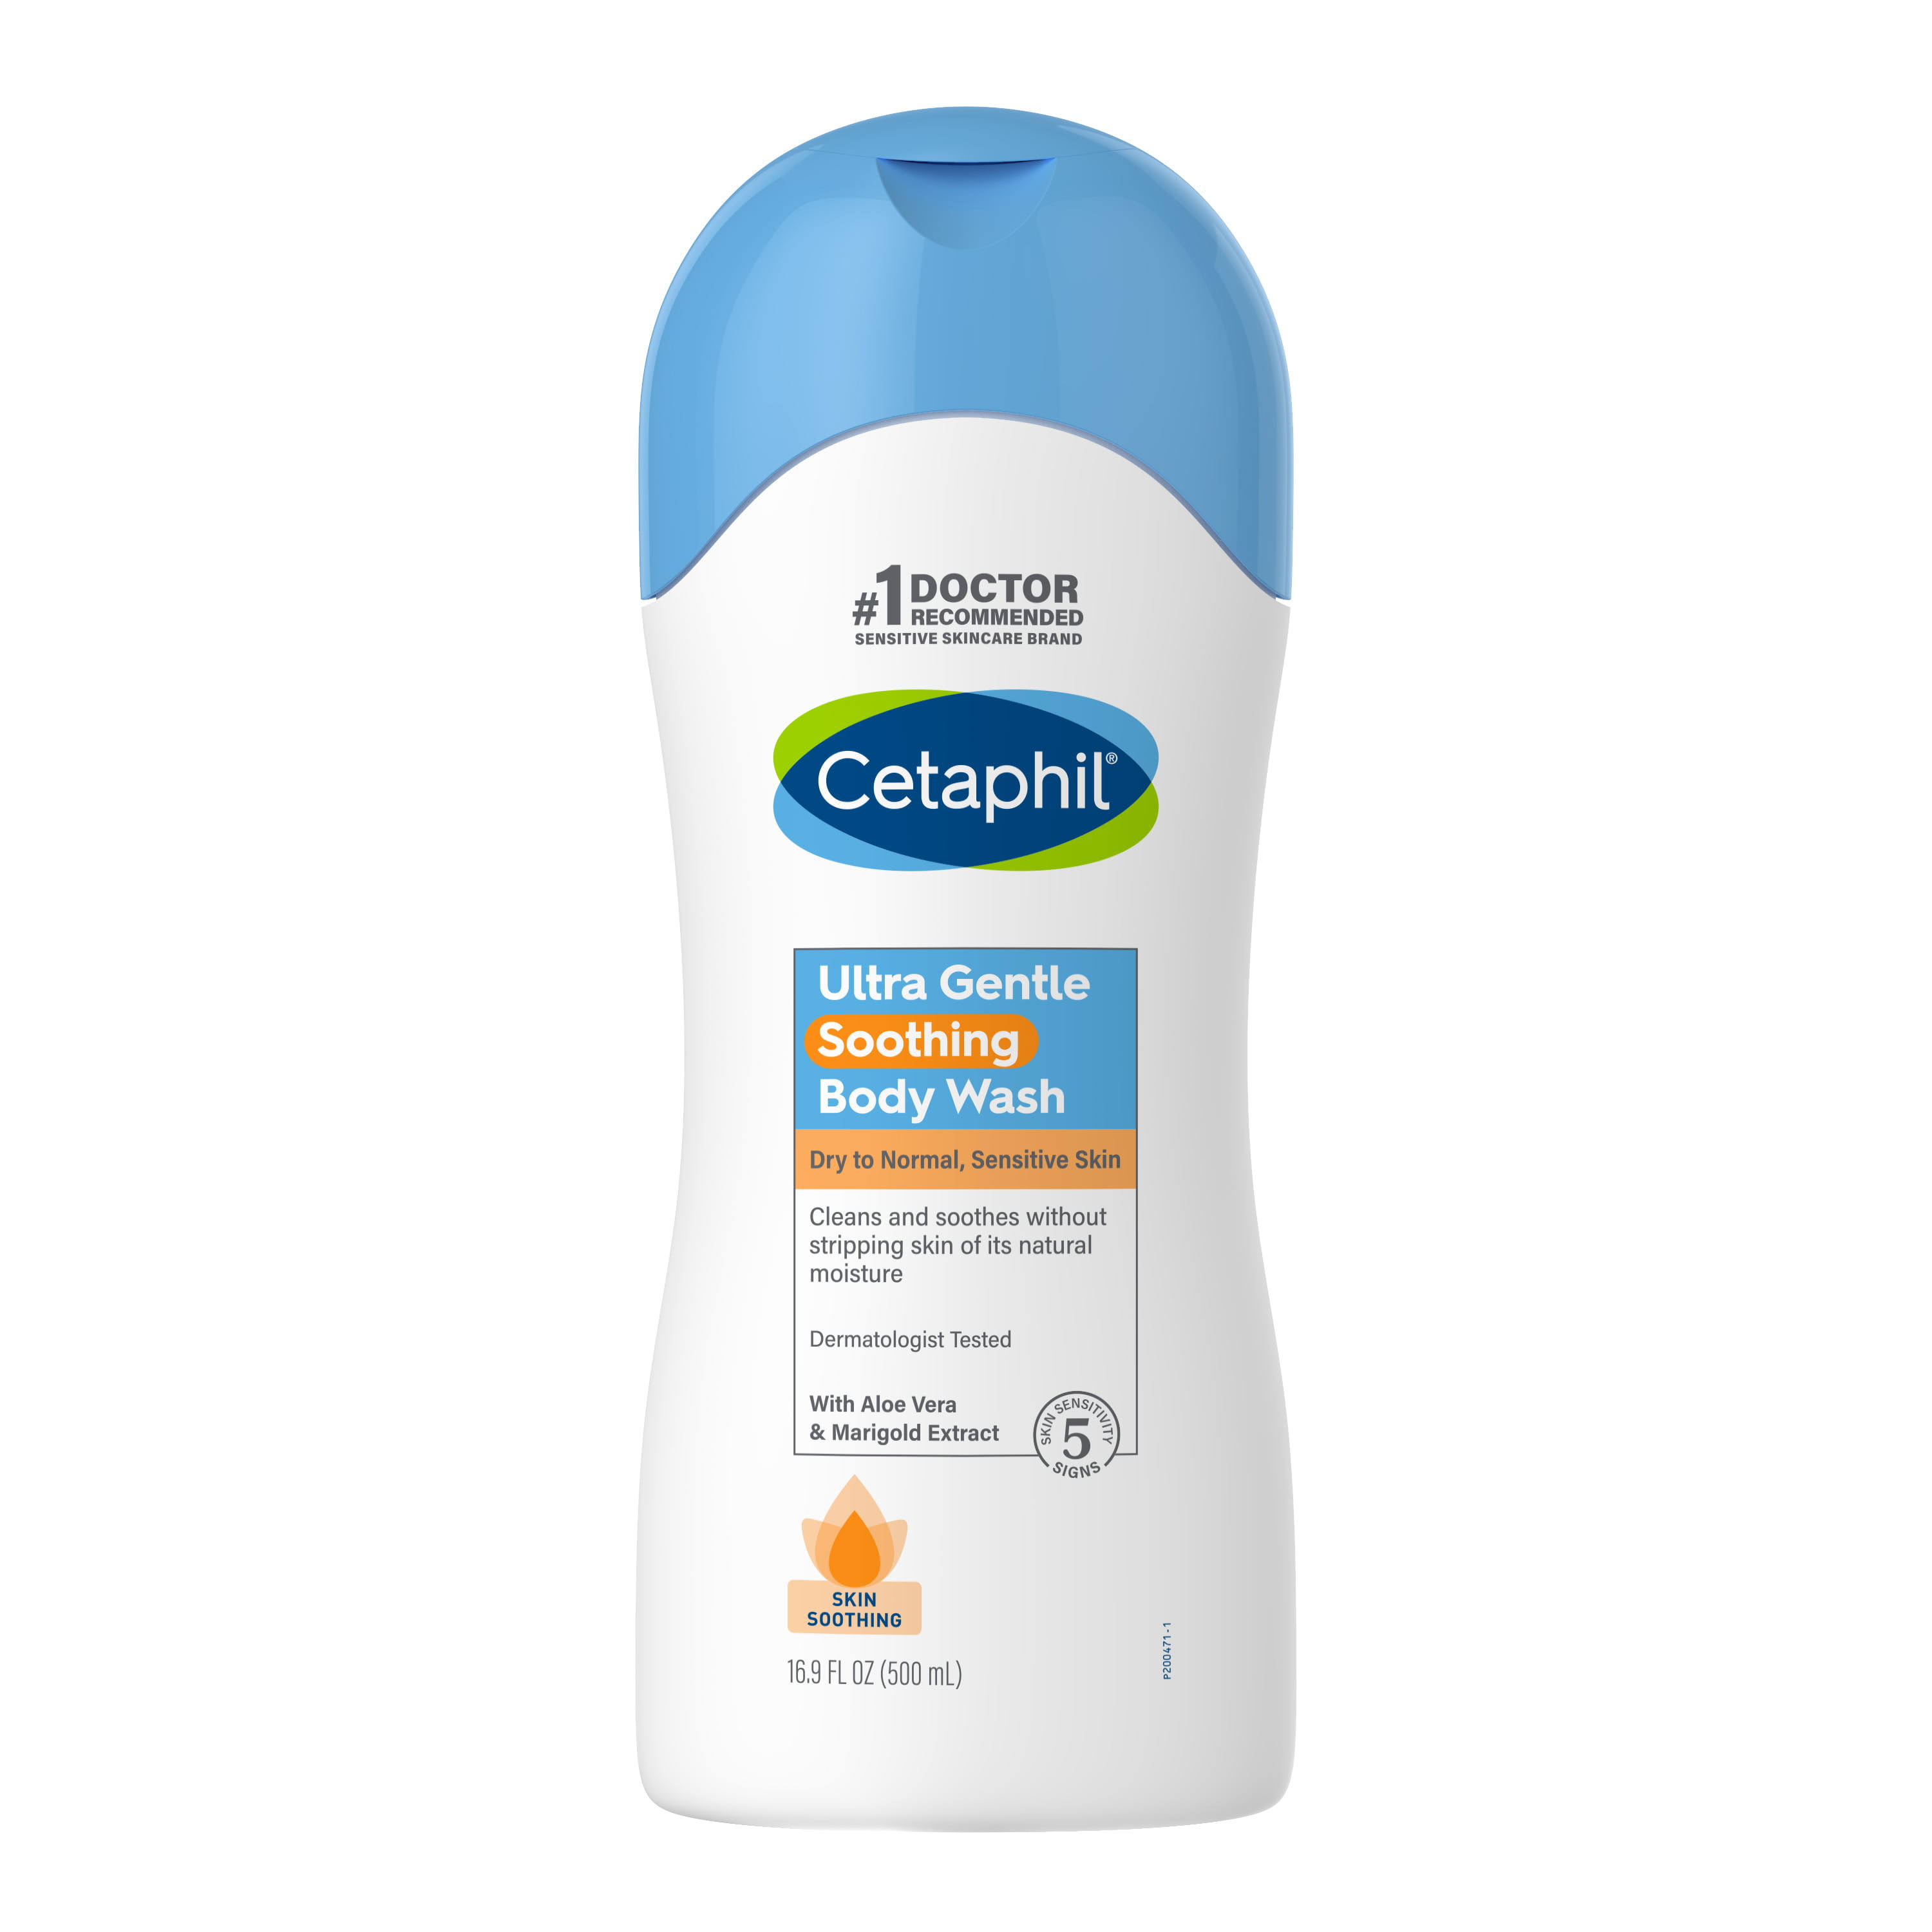 Cetaphil, Ultra Gentle, Soothing Body Wash, 16.9 FL oz (500 ml)